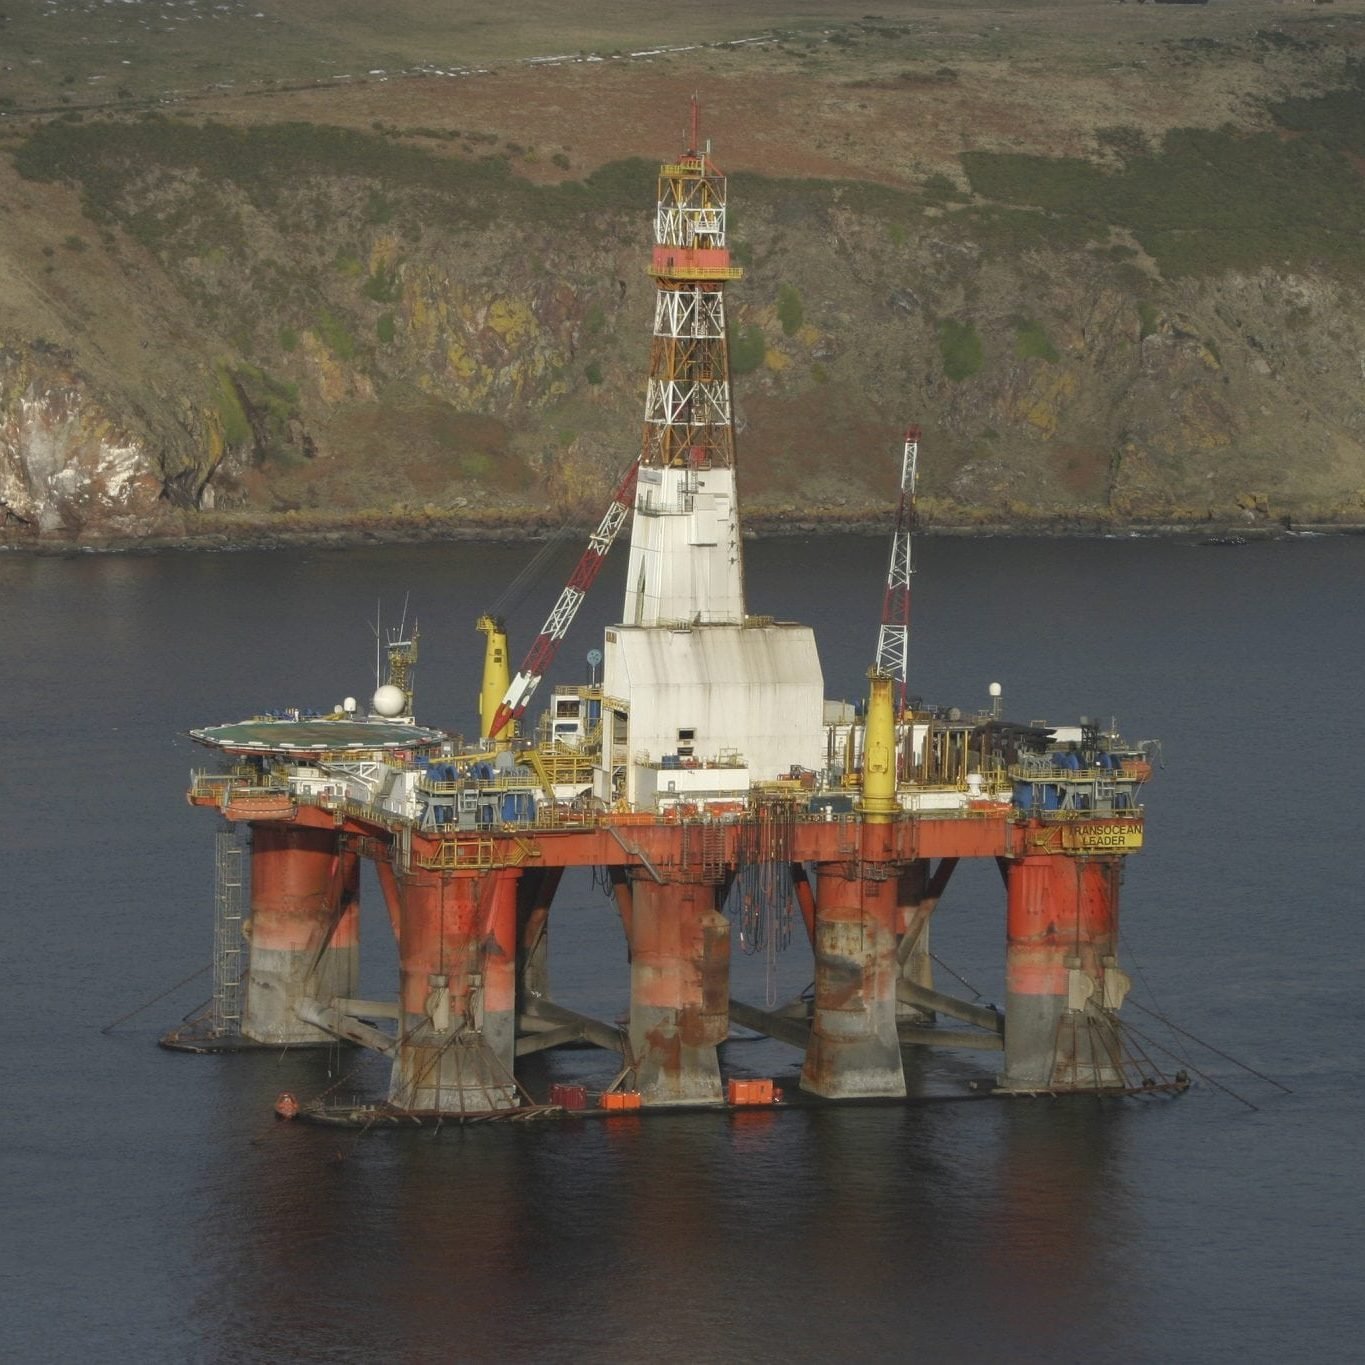 Drilling rig in Scotland